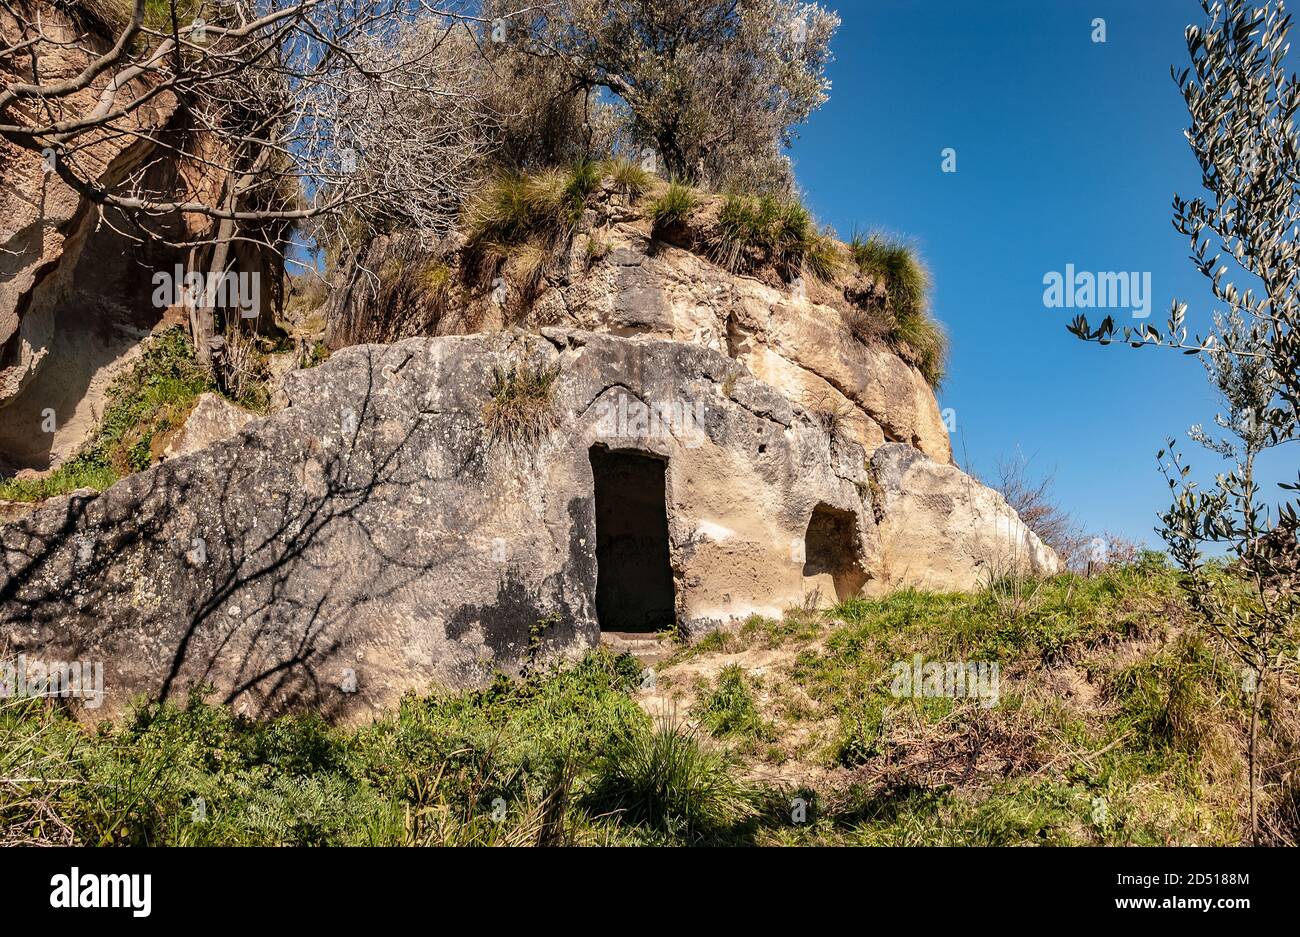 Italy Calabria Zungri Grotte degli Sbariati Stock Photo